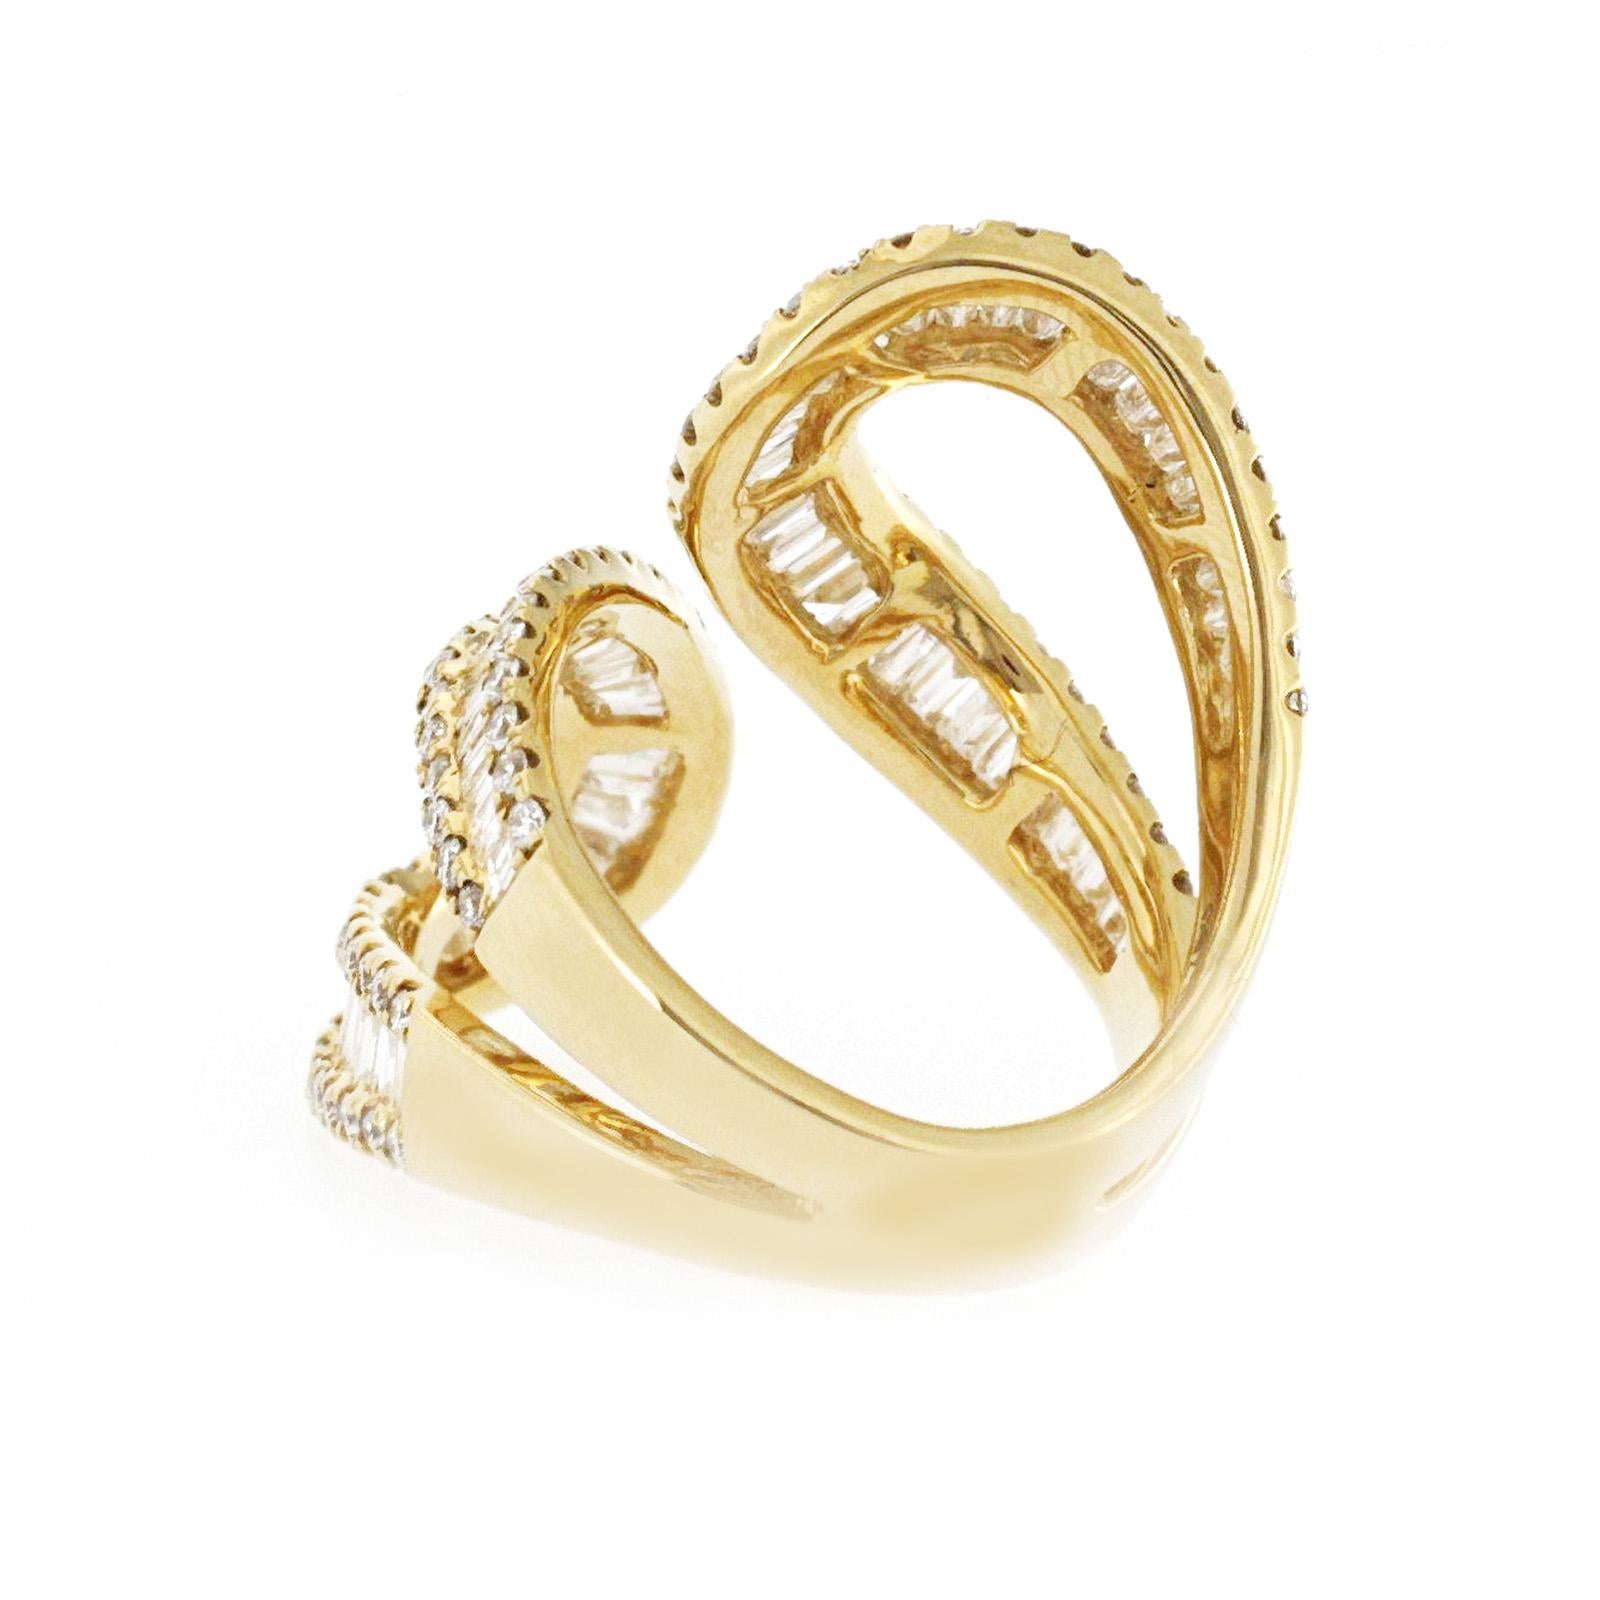 Fancy 18 Karat Yellow Gold 3.79 Carat Diamond Wrap Ring For Sale 1